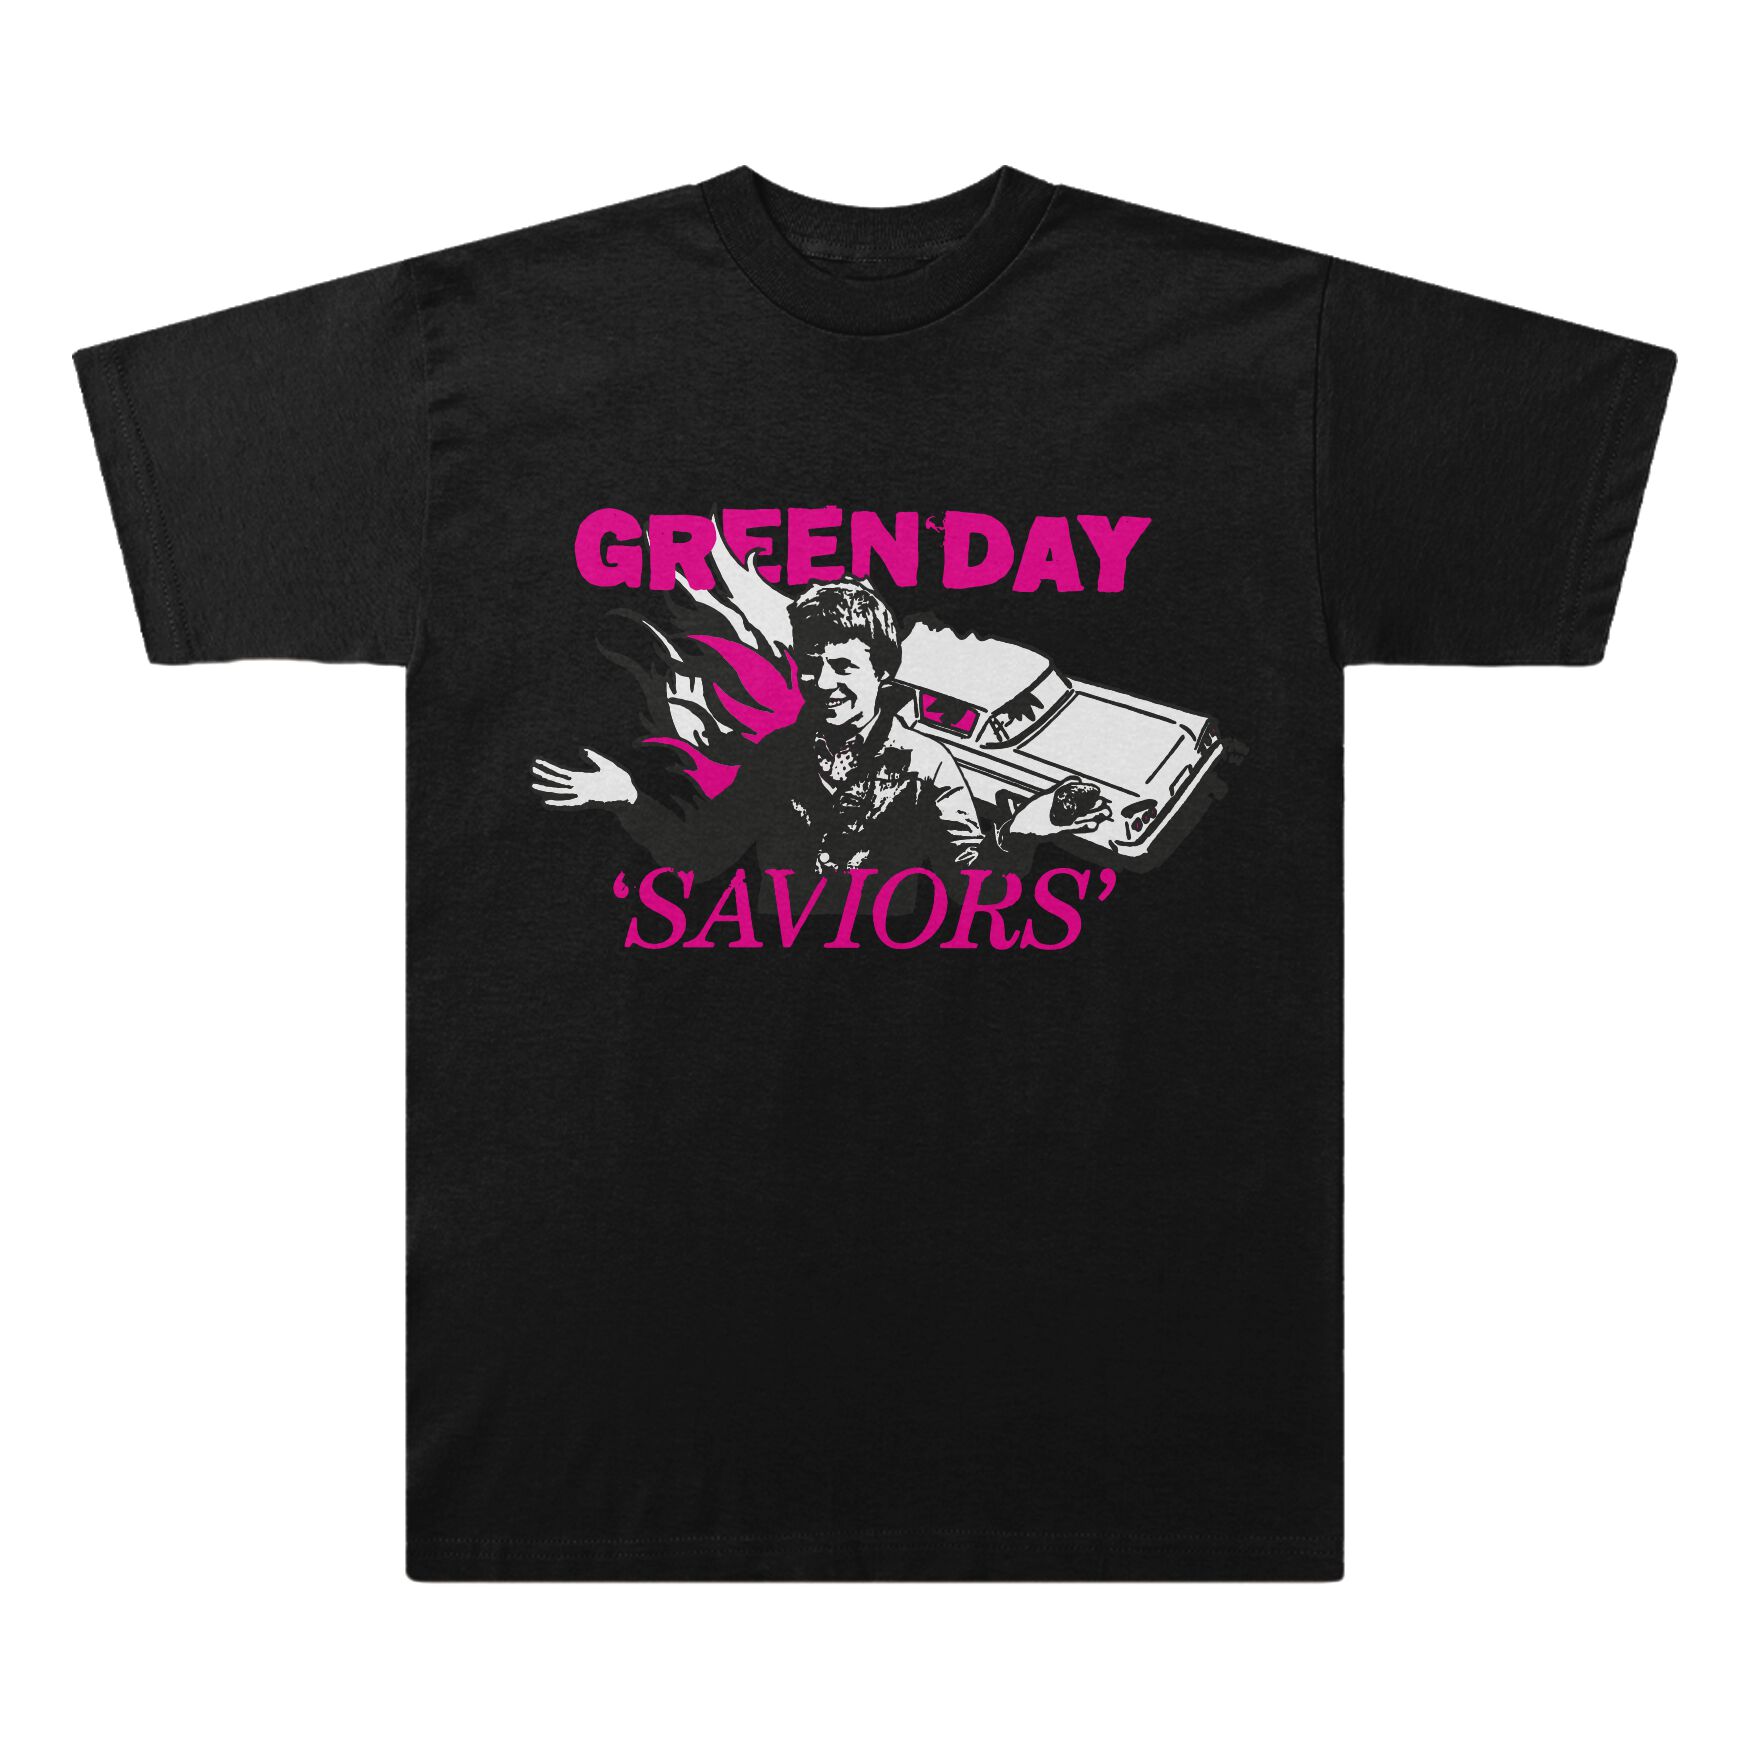 Green Day Saviors Illustration T-Shirt schwarz in M